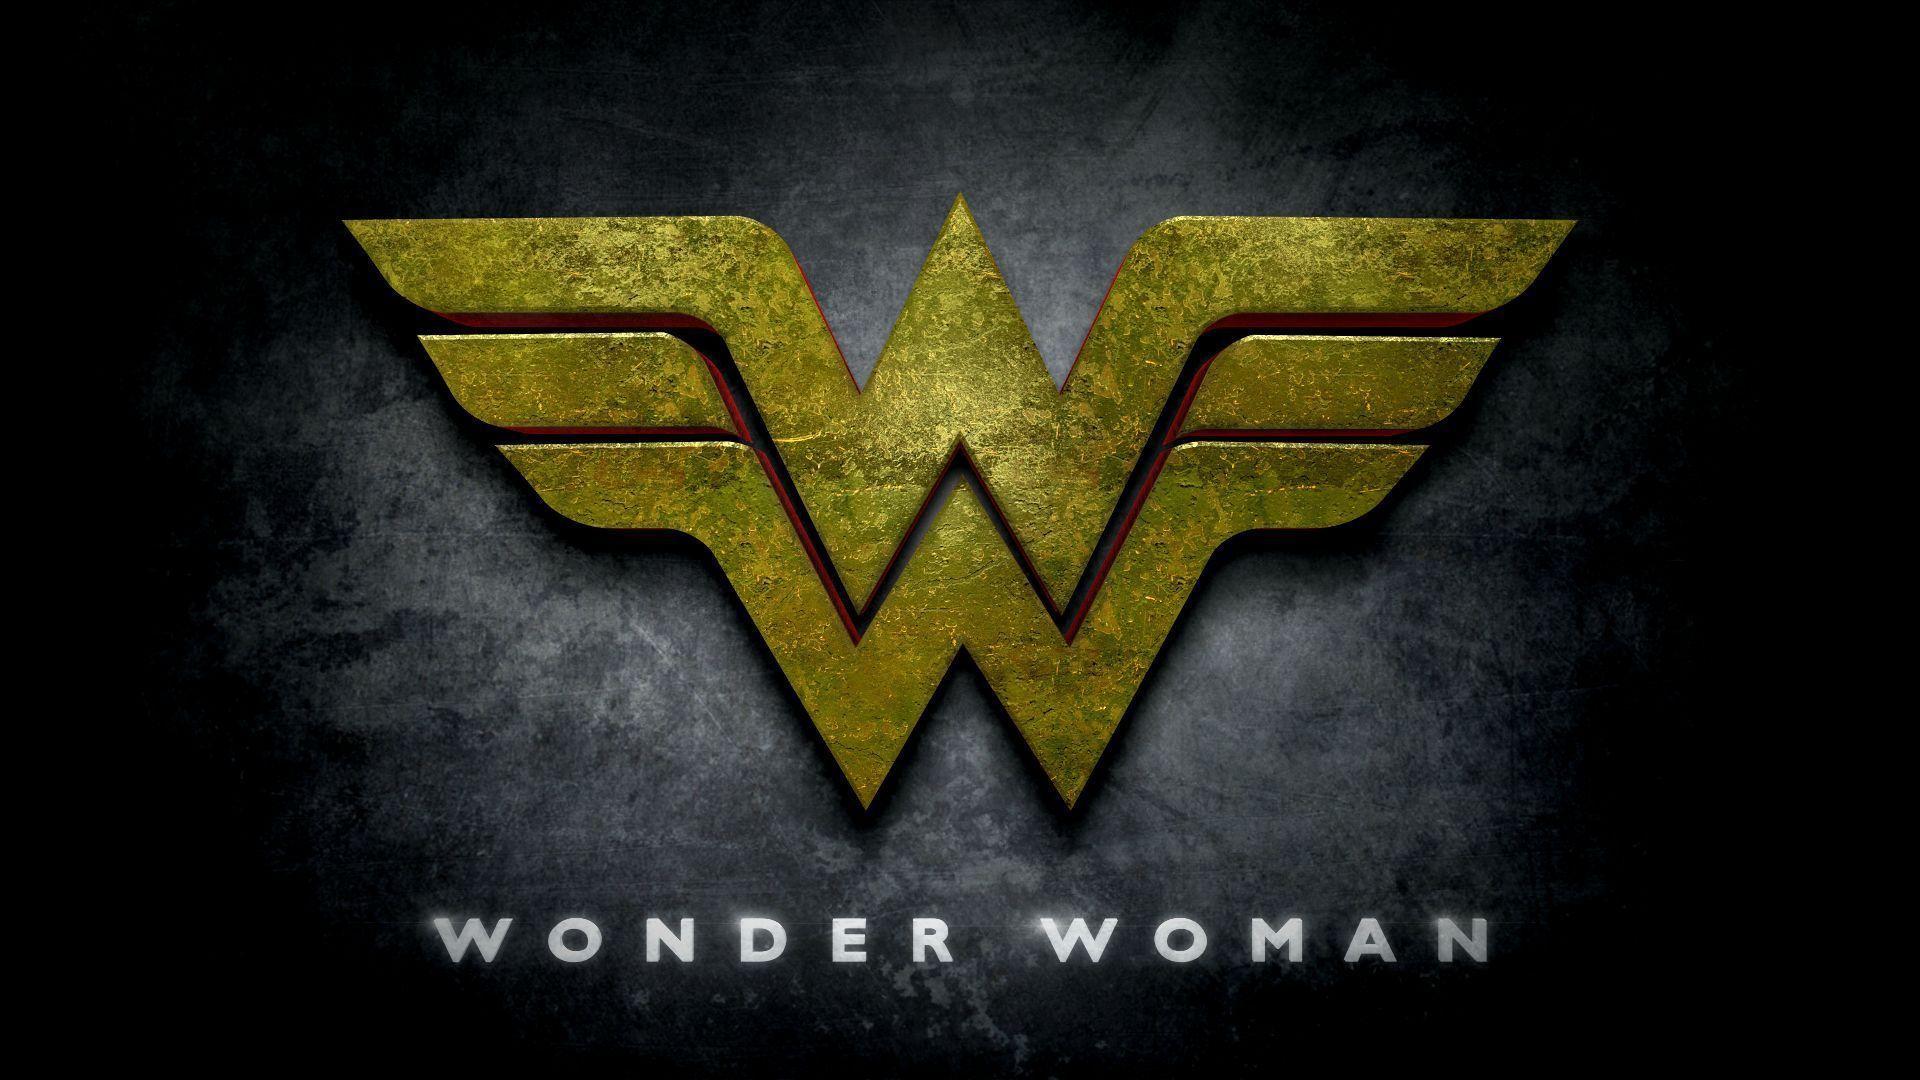 Awesome Woman Logo - Collection Logo of Wonder Woman | PixelsTalk.Net